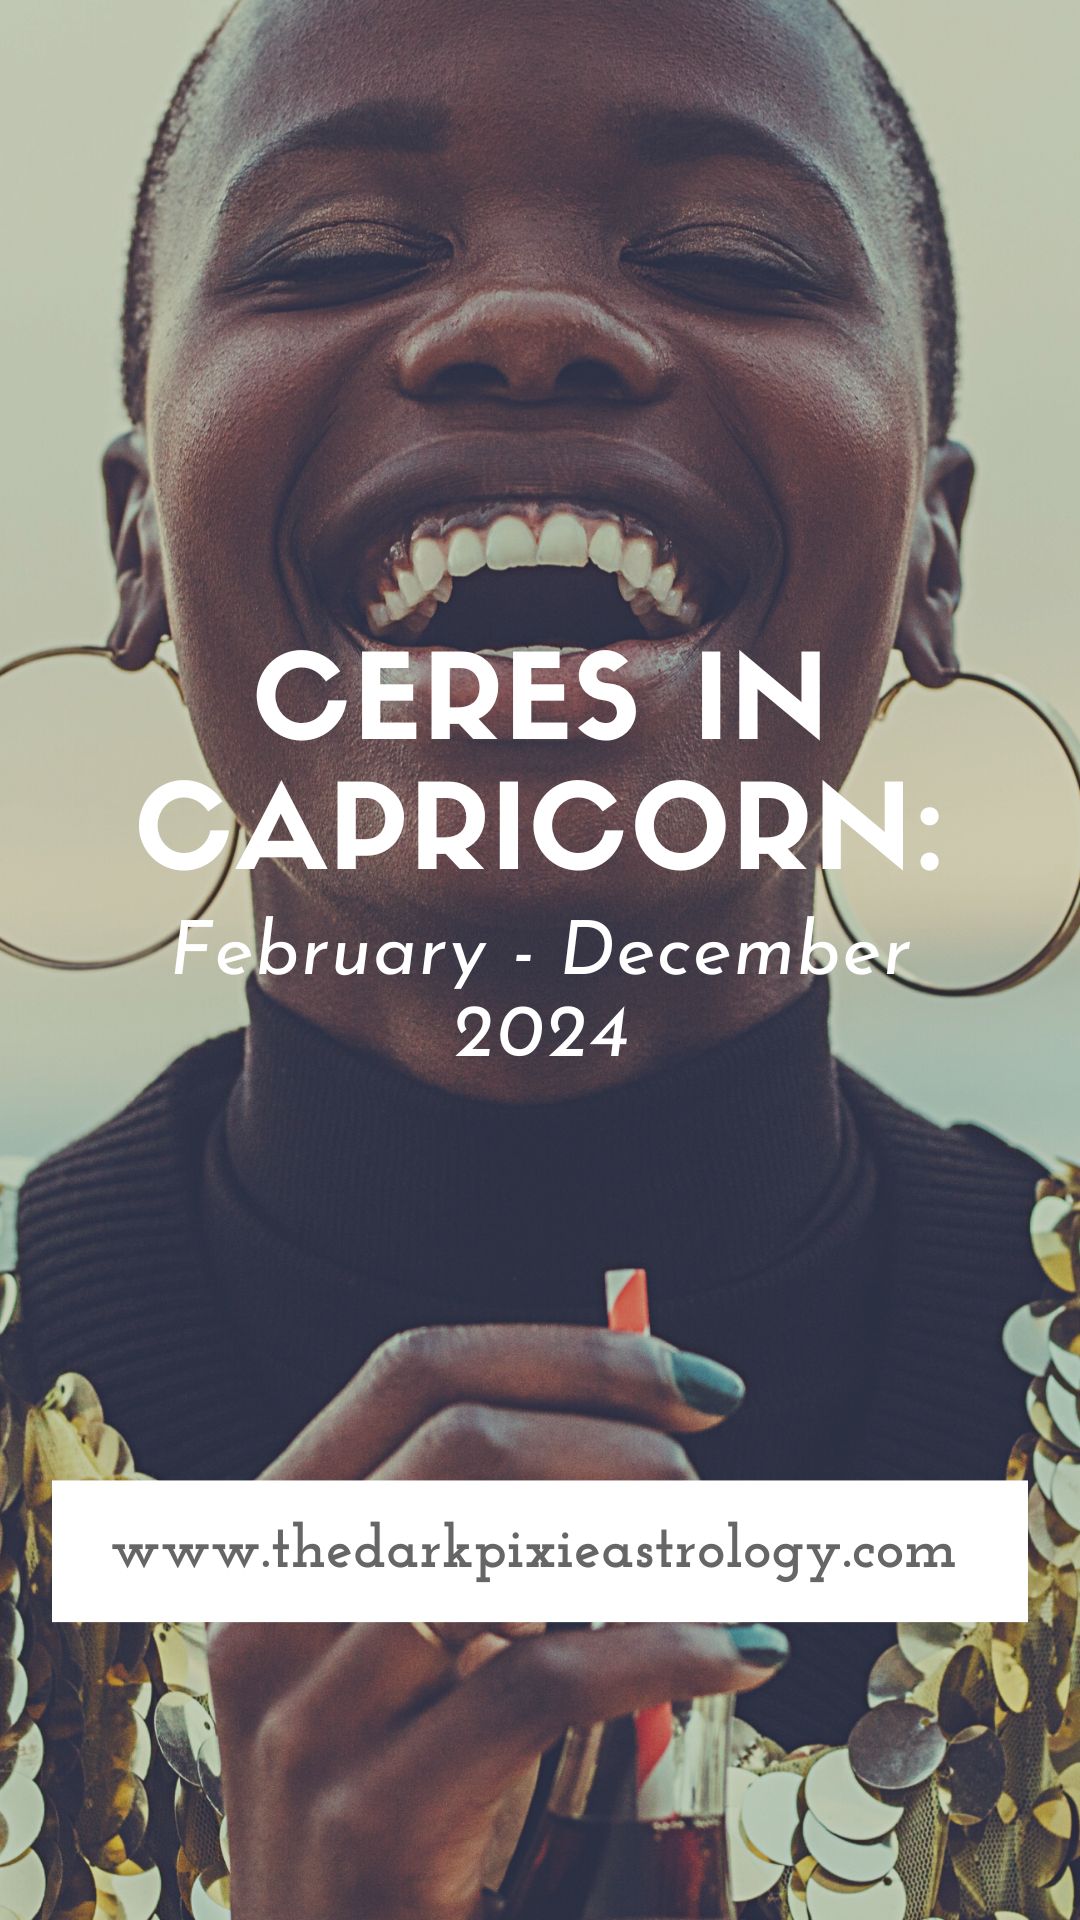 Ceres in Capricorn February December 2024 The Dark Pixie Astrology